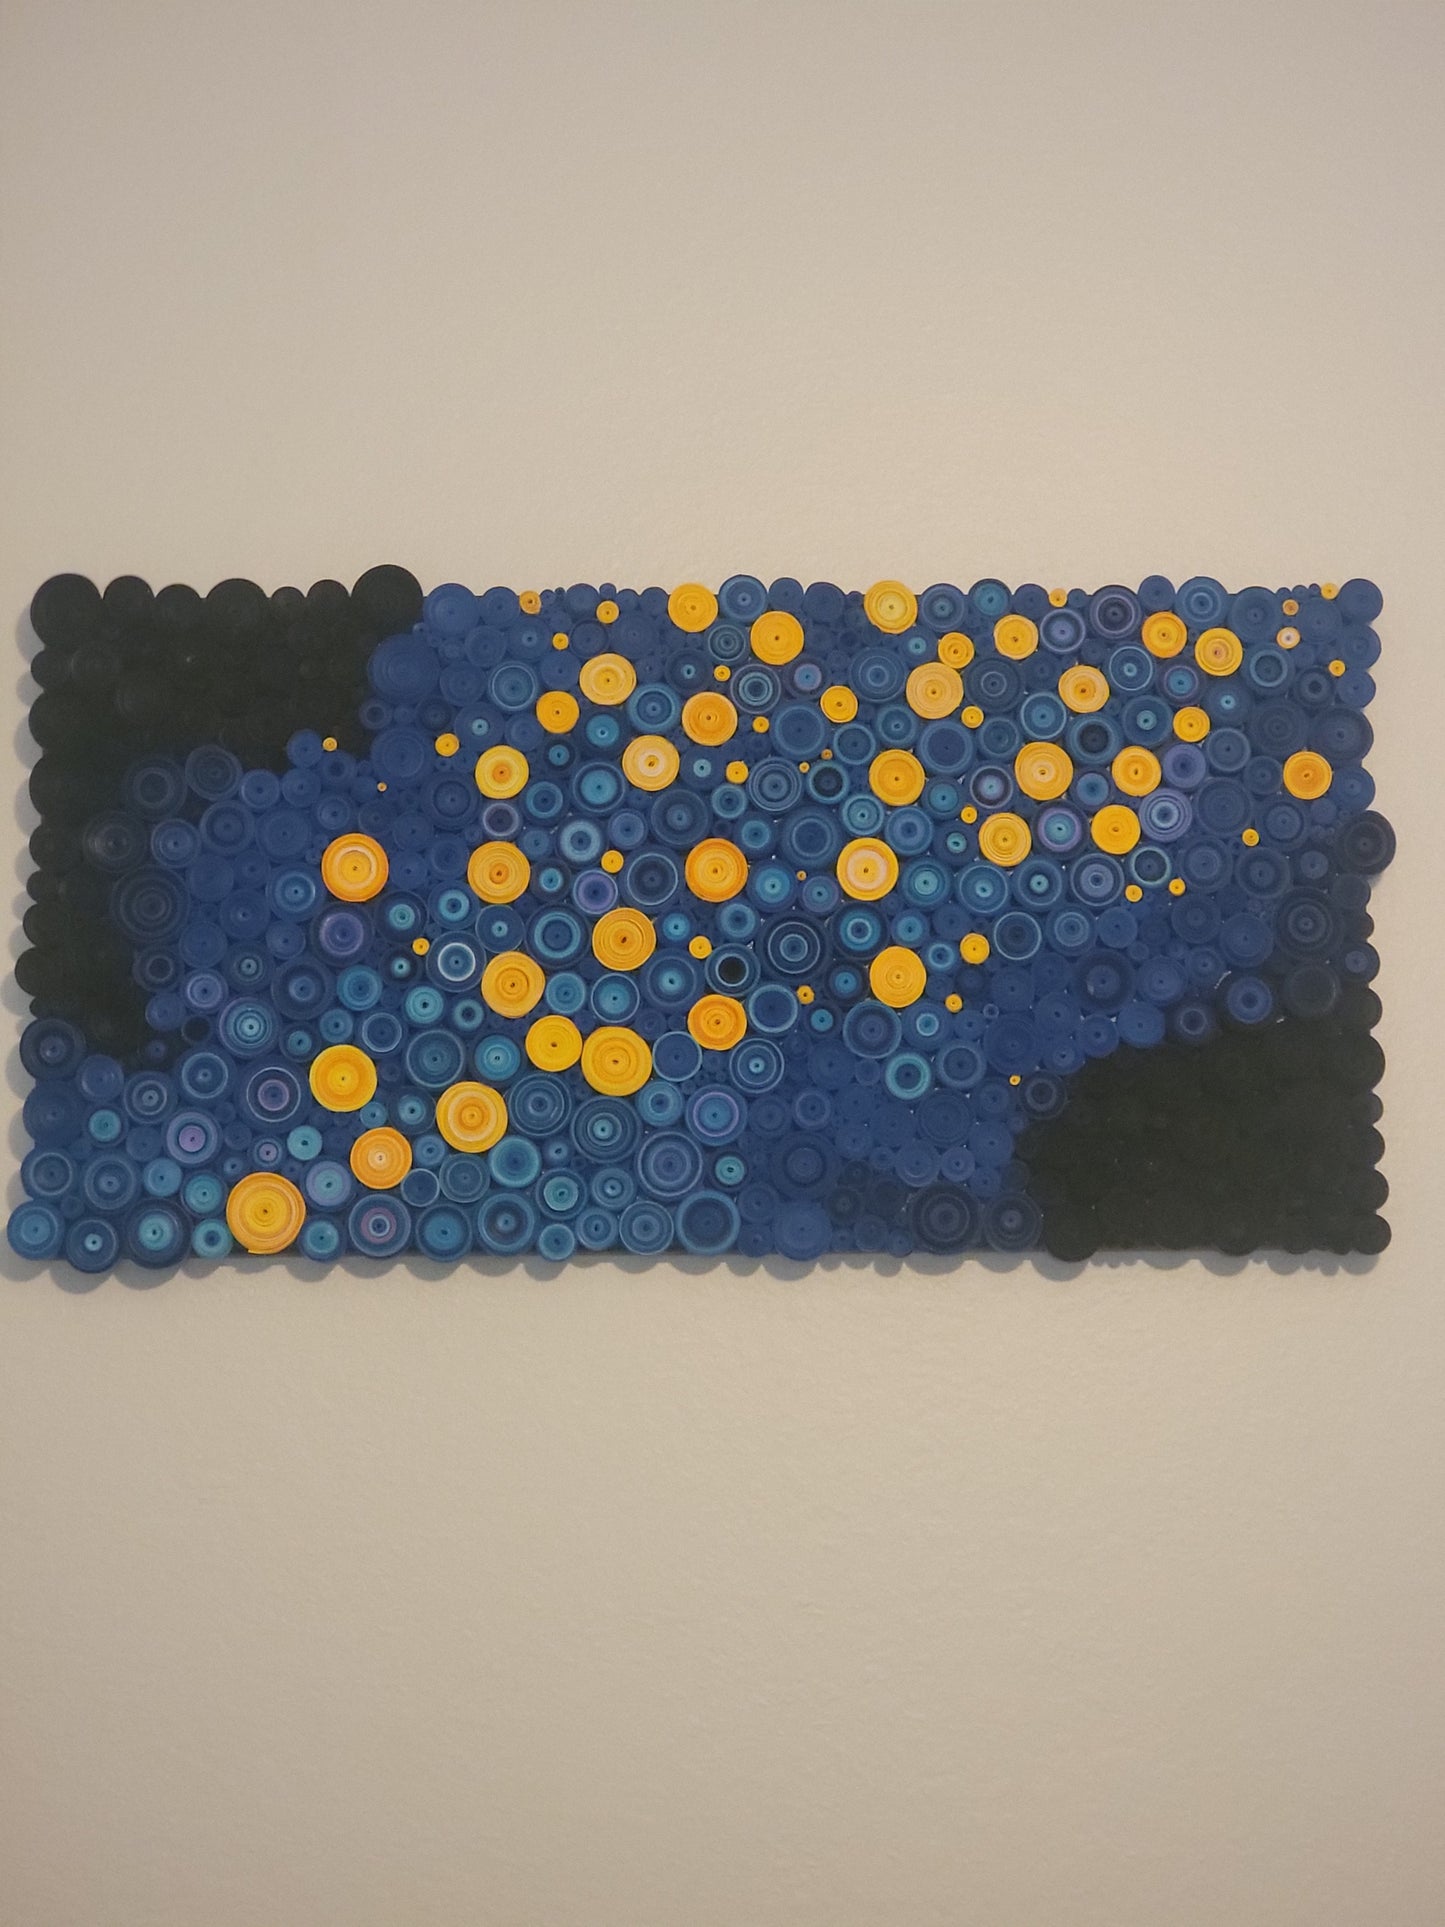 Black, Blue and Yellow Swirls Canvas Art, size 1x2 ft.